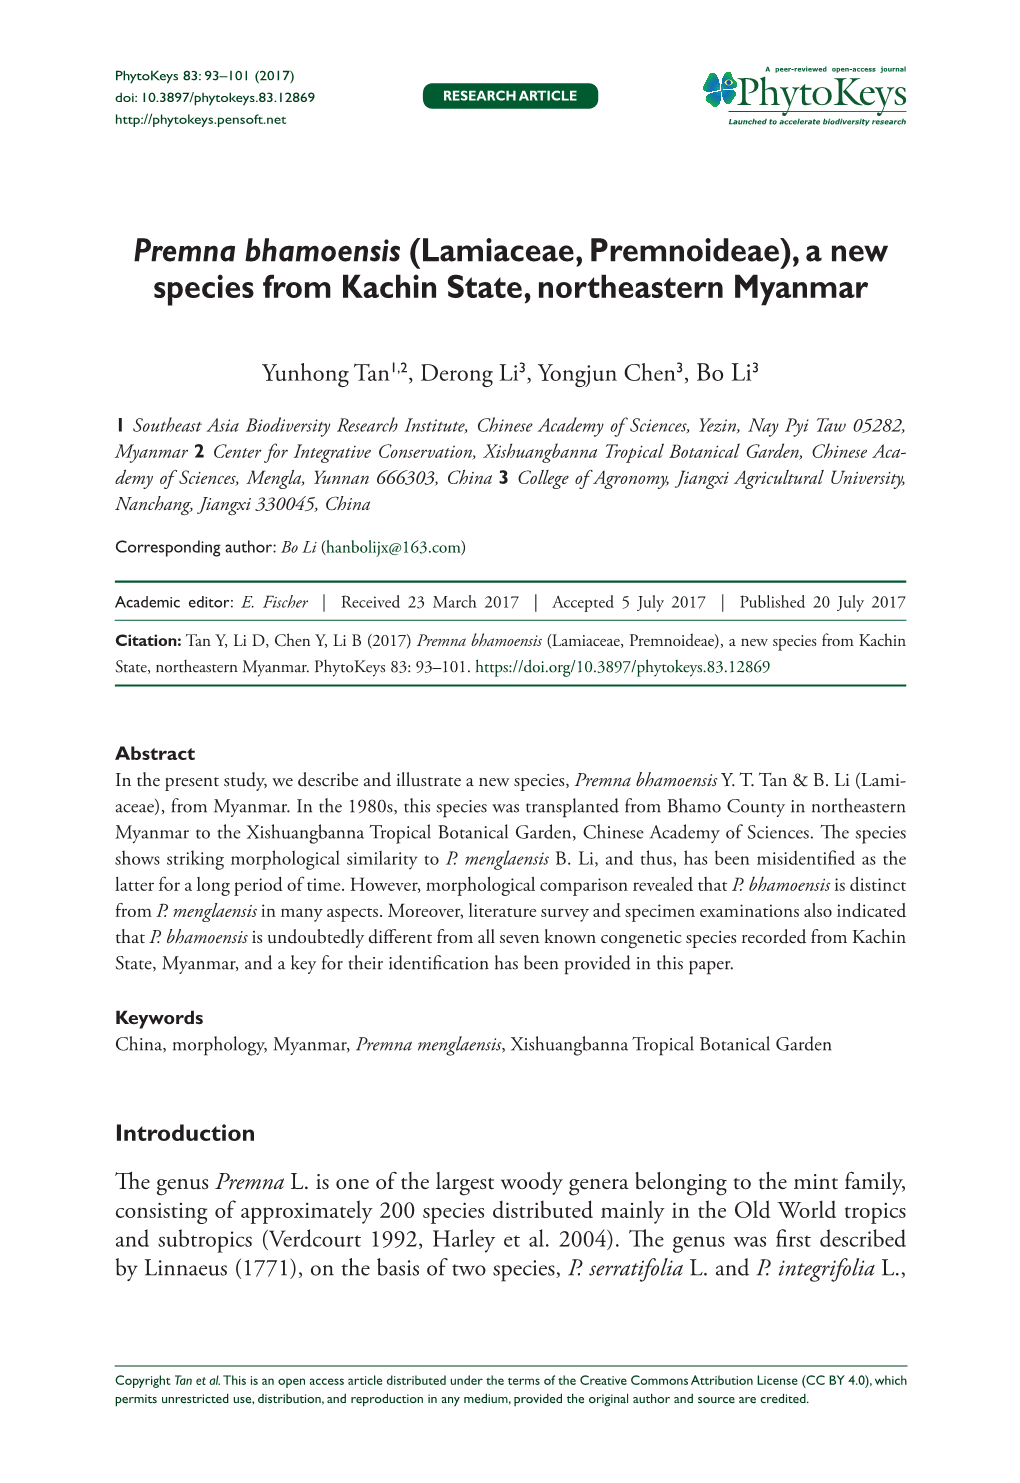 Premna Bhamoensis (Lamiaceae, Premnoideae), a New Species from Kachin State, Northeastern Myanmar